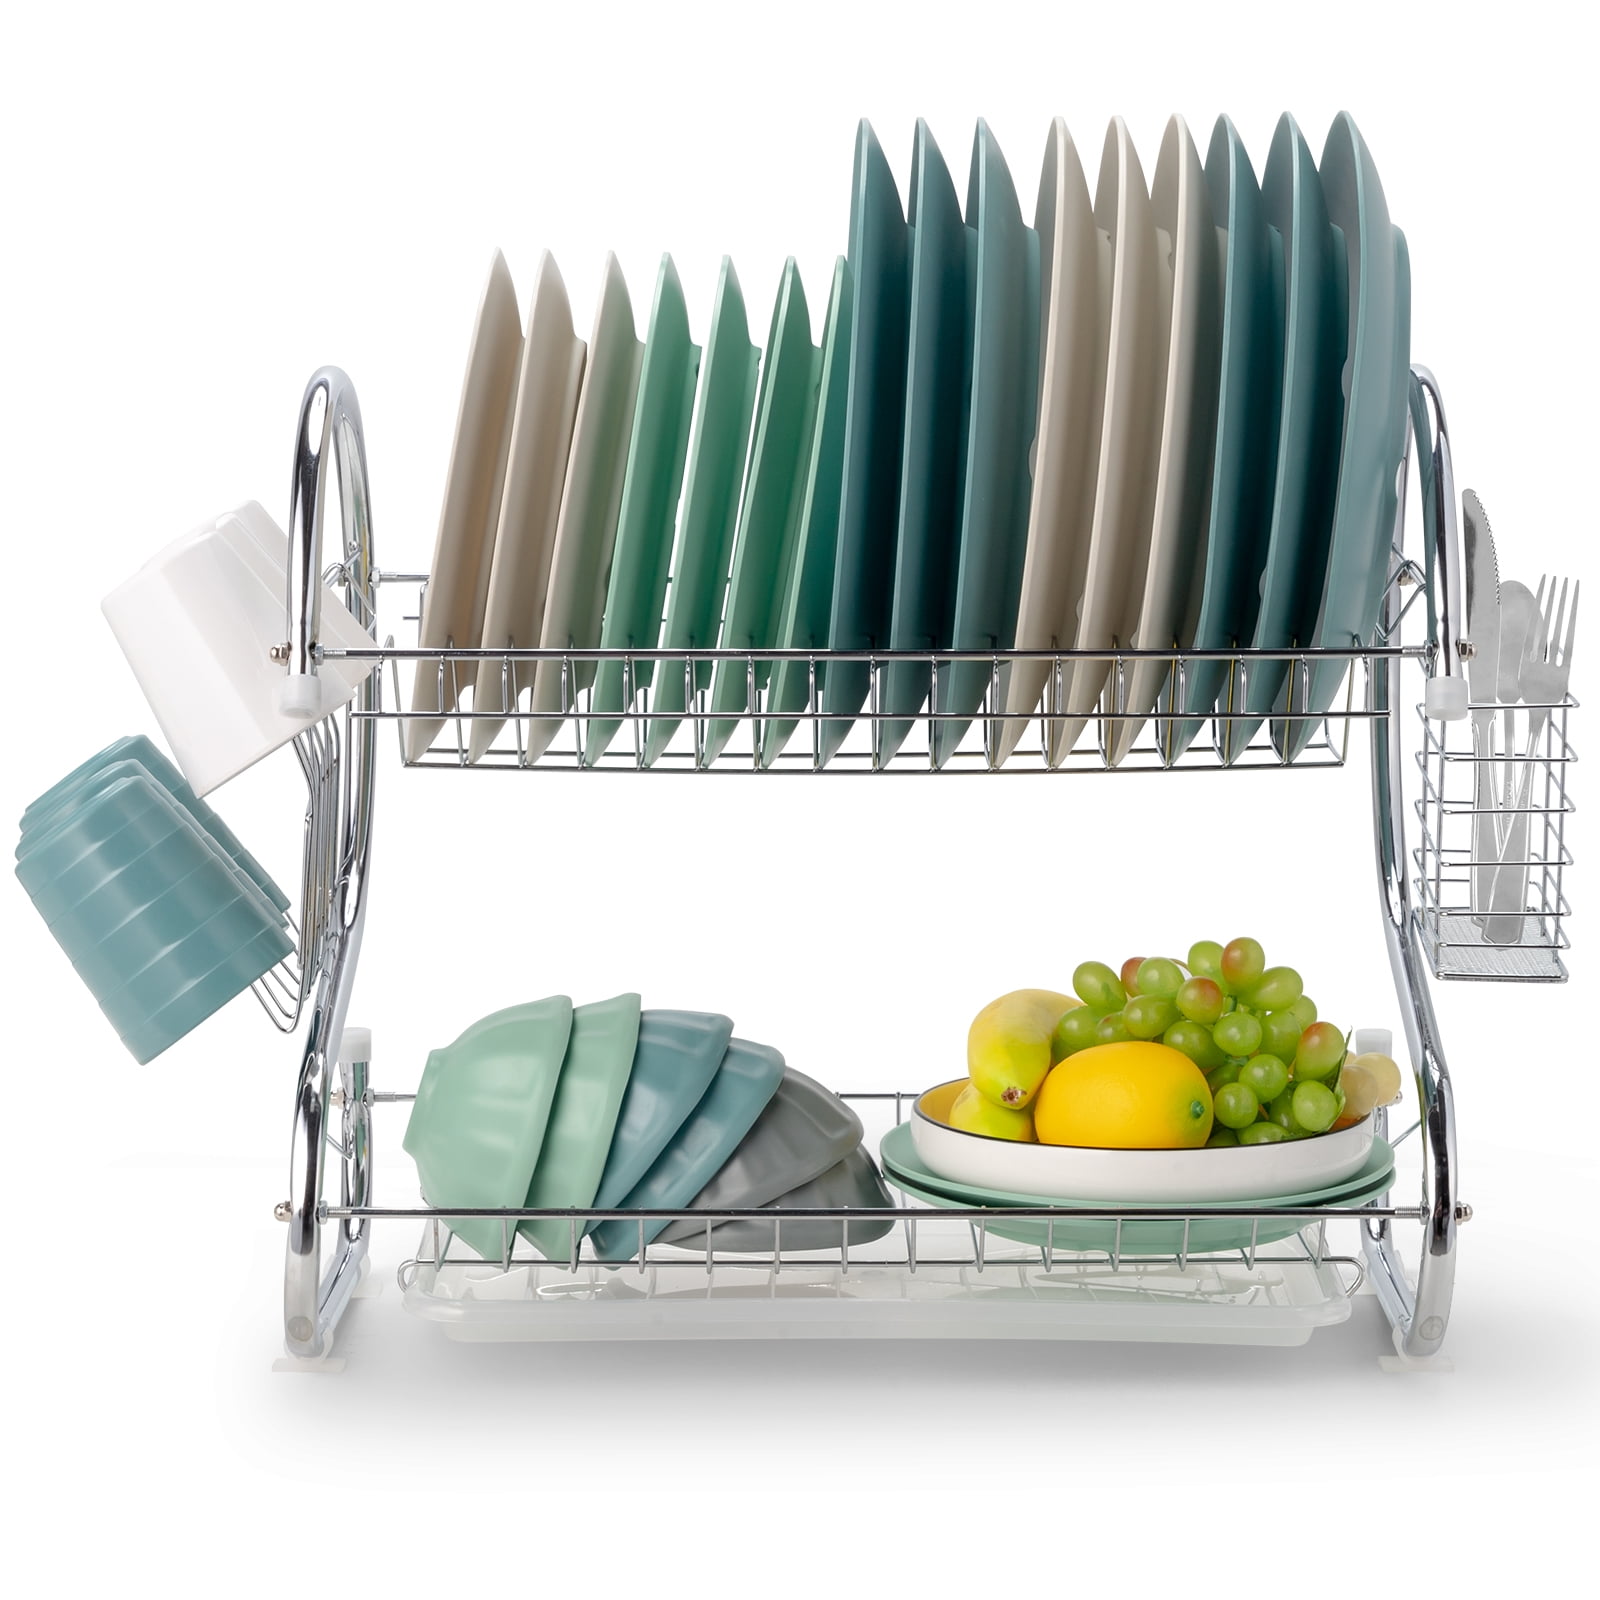  EXIN DECHEN Dish Drying Rack – 2 Tier Large Dish Rack